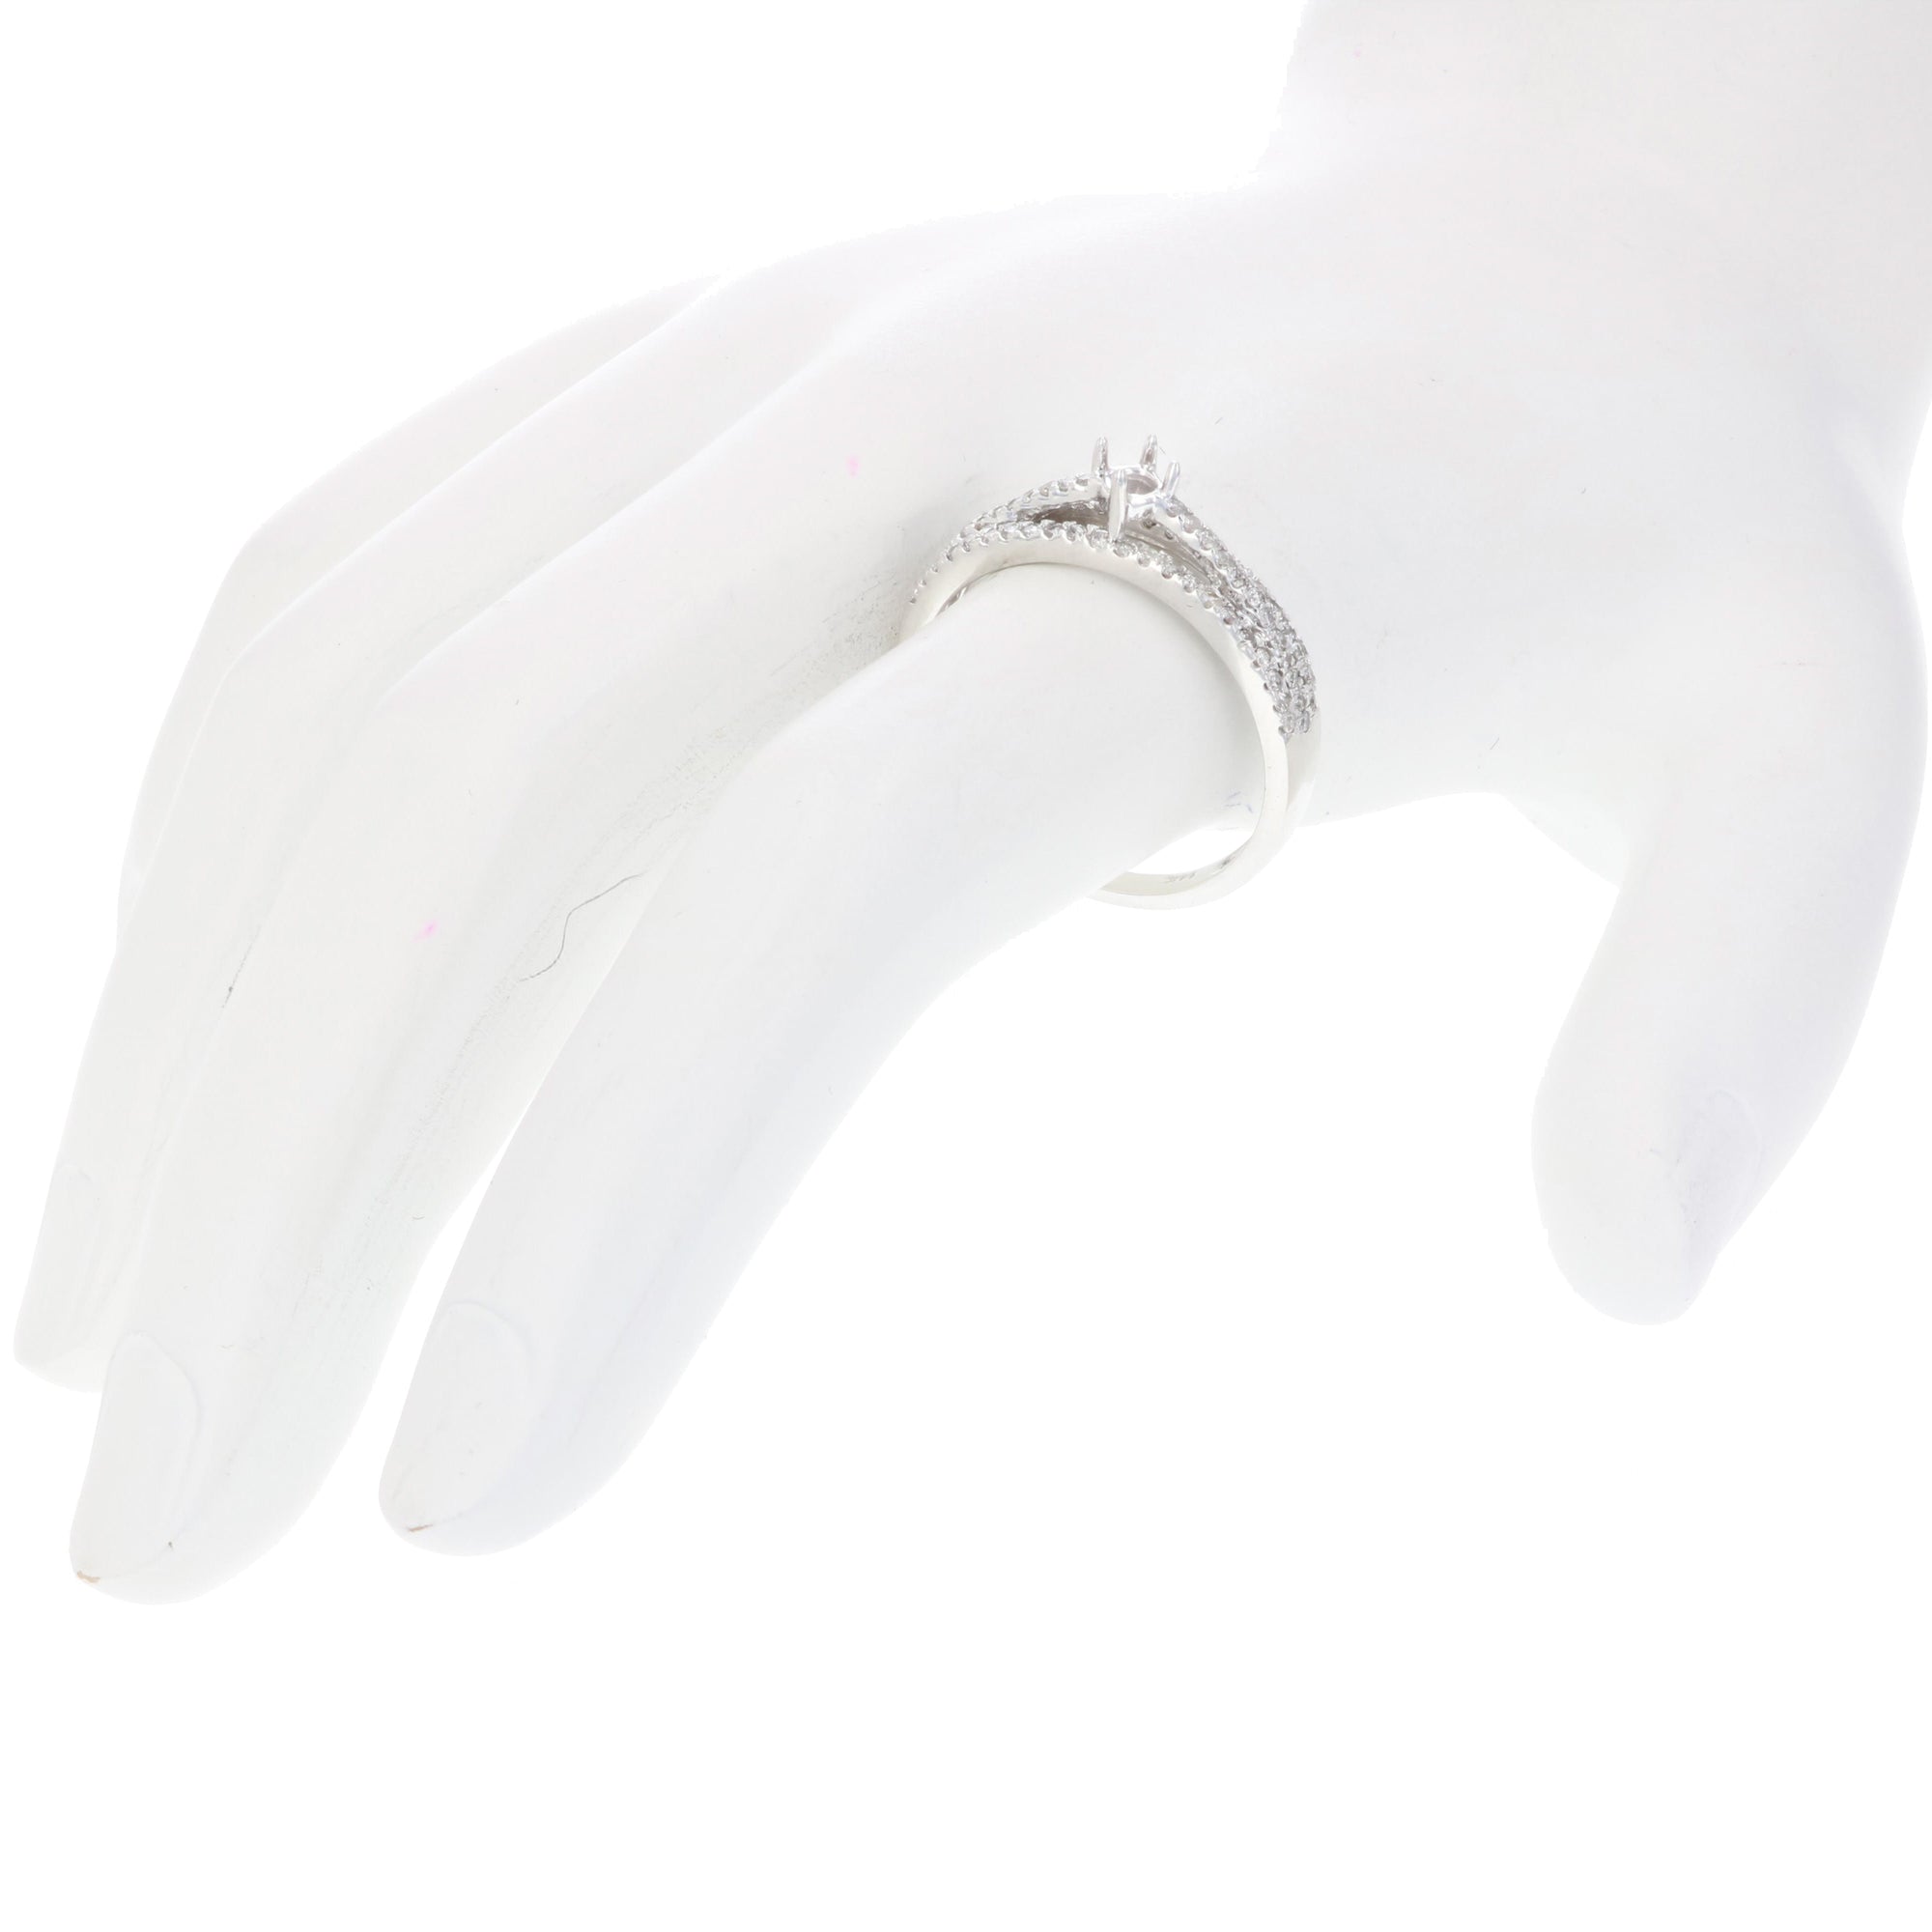 1/3 cttw Diamond Semi Mount Engagement Ring 14K White Gold Wedding Bridal Size 7